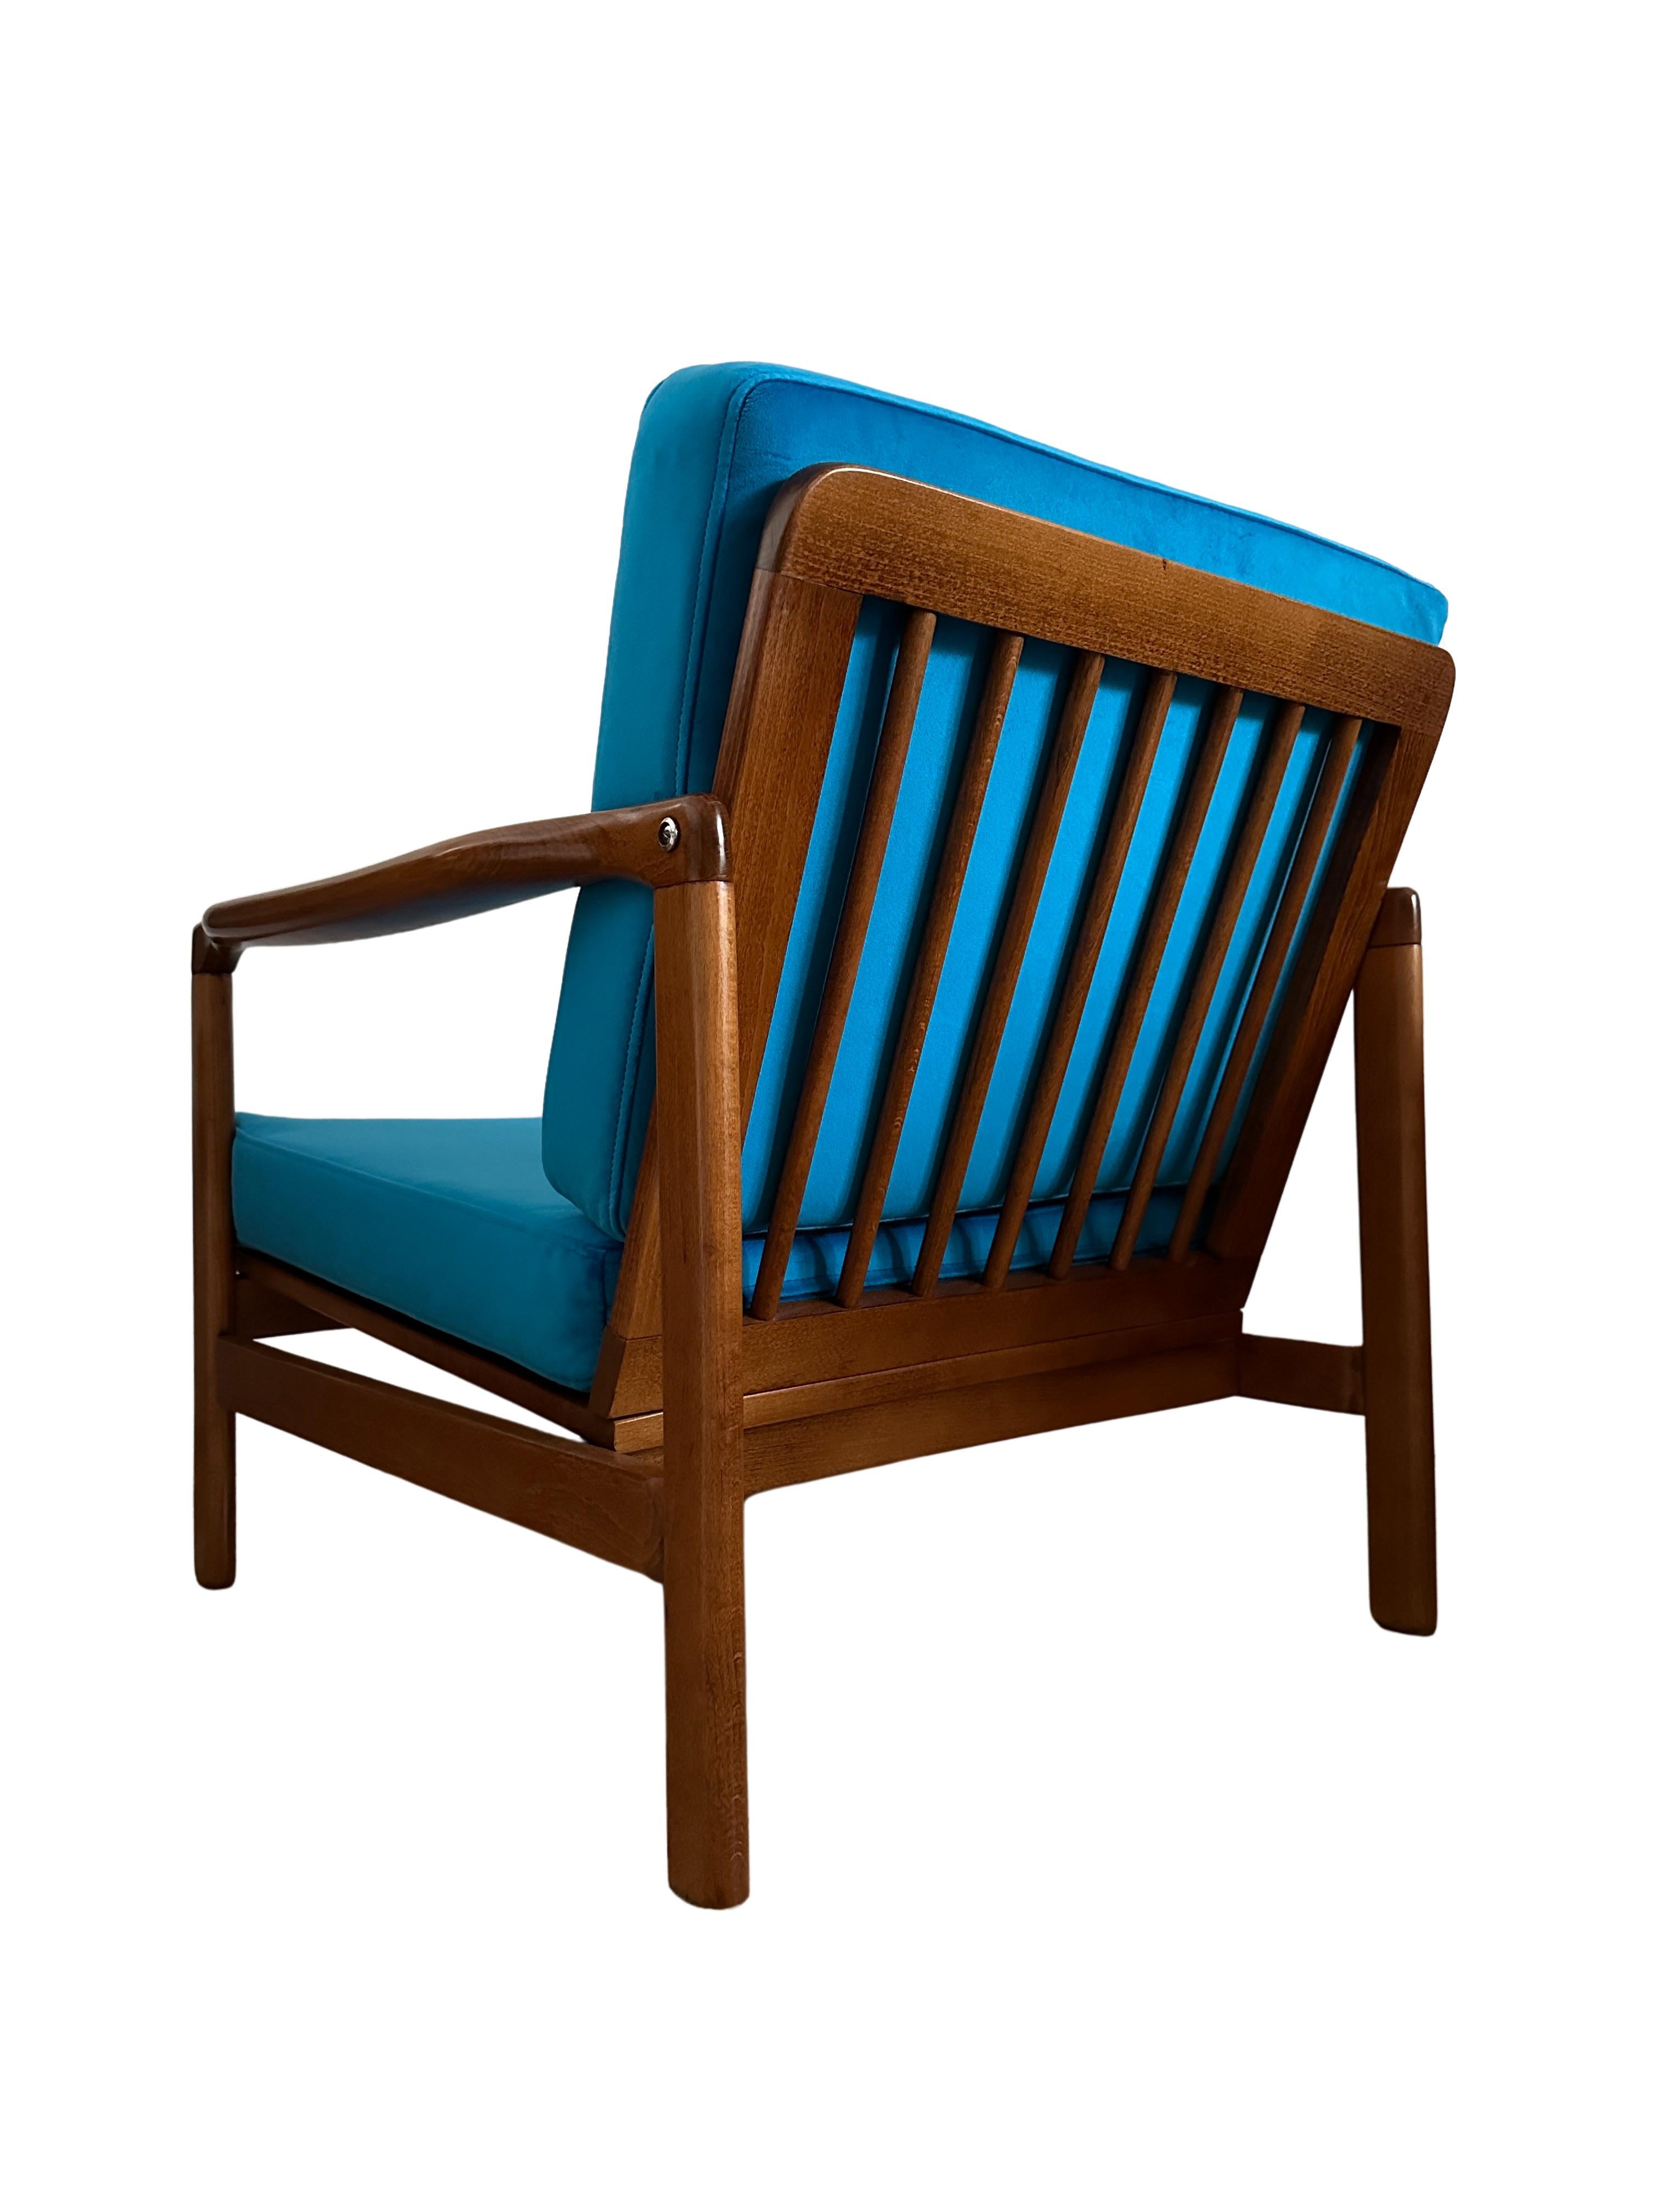 20th Century Midcentury Armchair by Zenon Baczyk, Blue Velvet Upholstery, Poland, 1960s For Sale